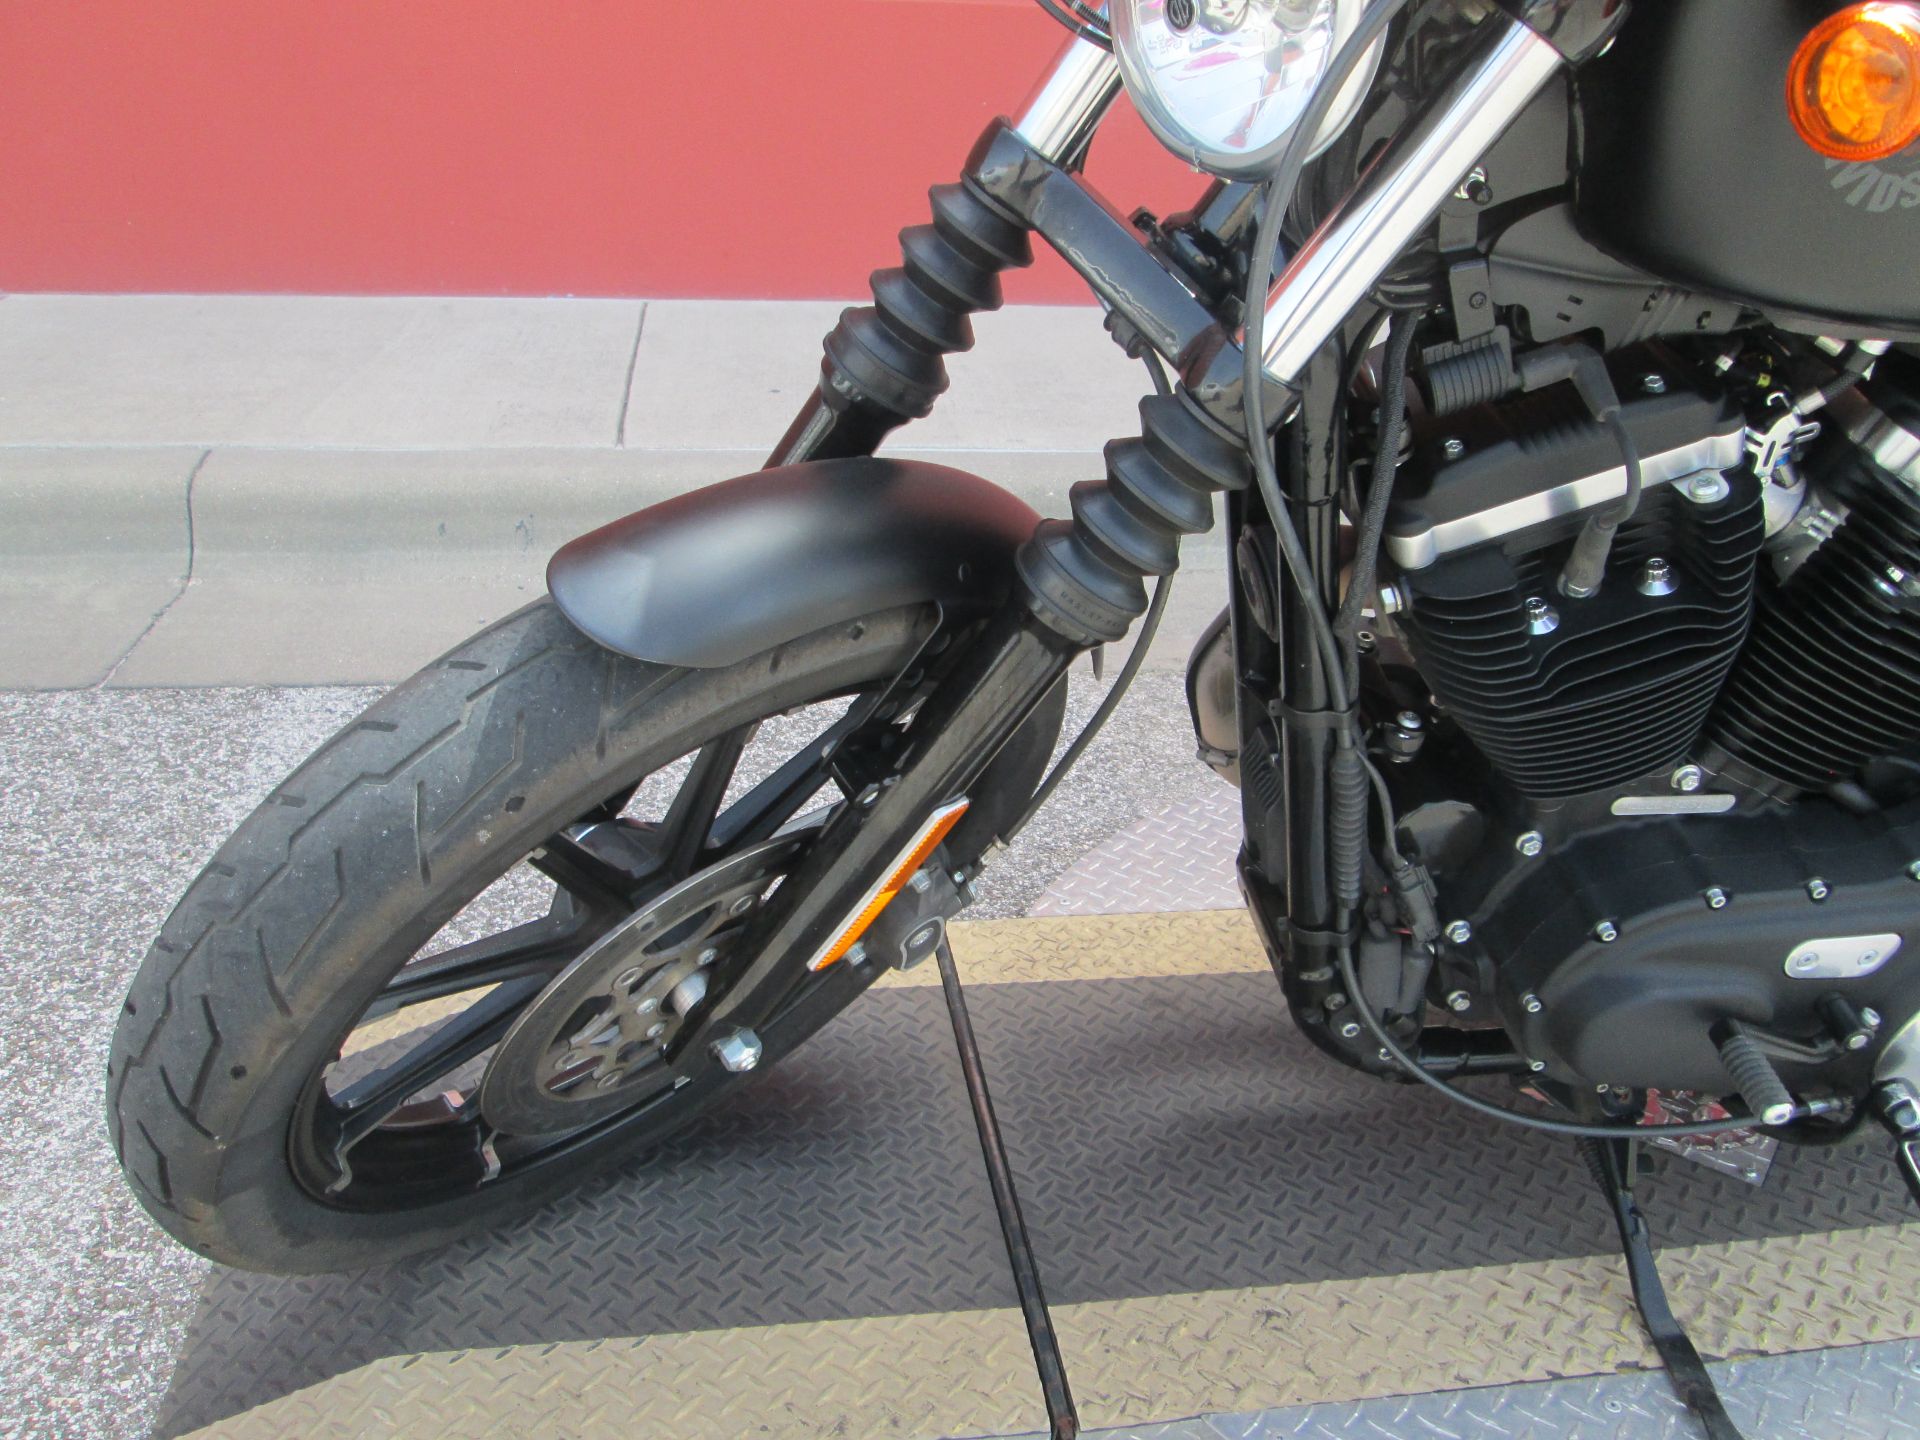 2020 Harley-Davidson Iron 883™ in Temple, Texas - Photo 16